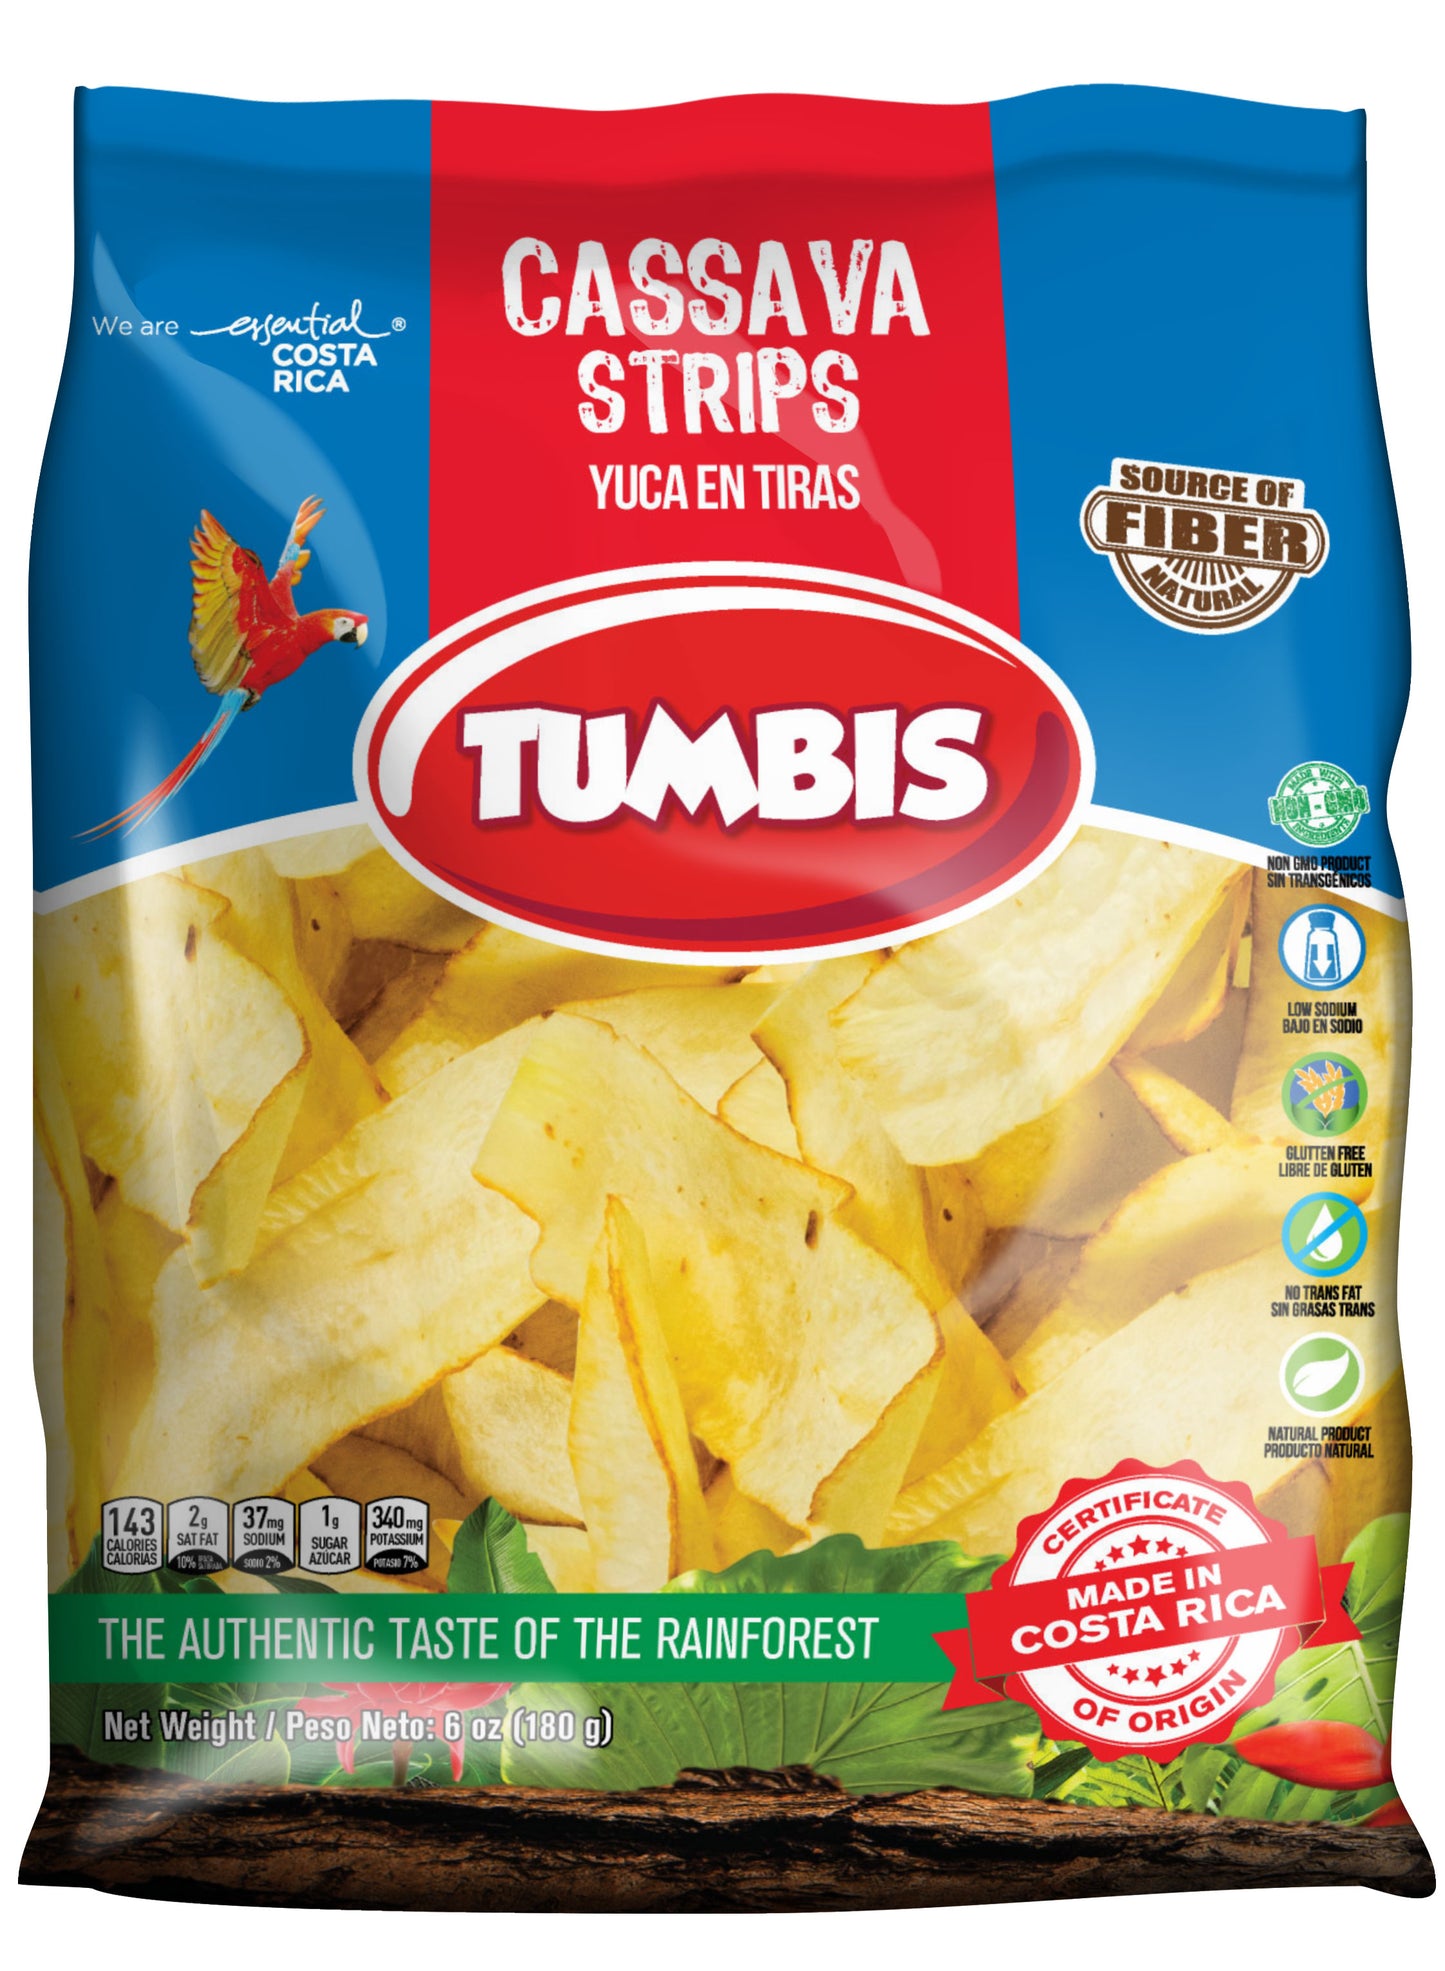 Cassava Strips by Tumbis - Costa Rica